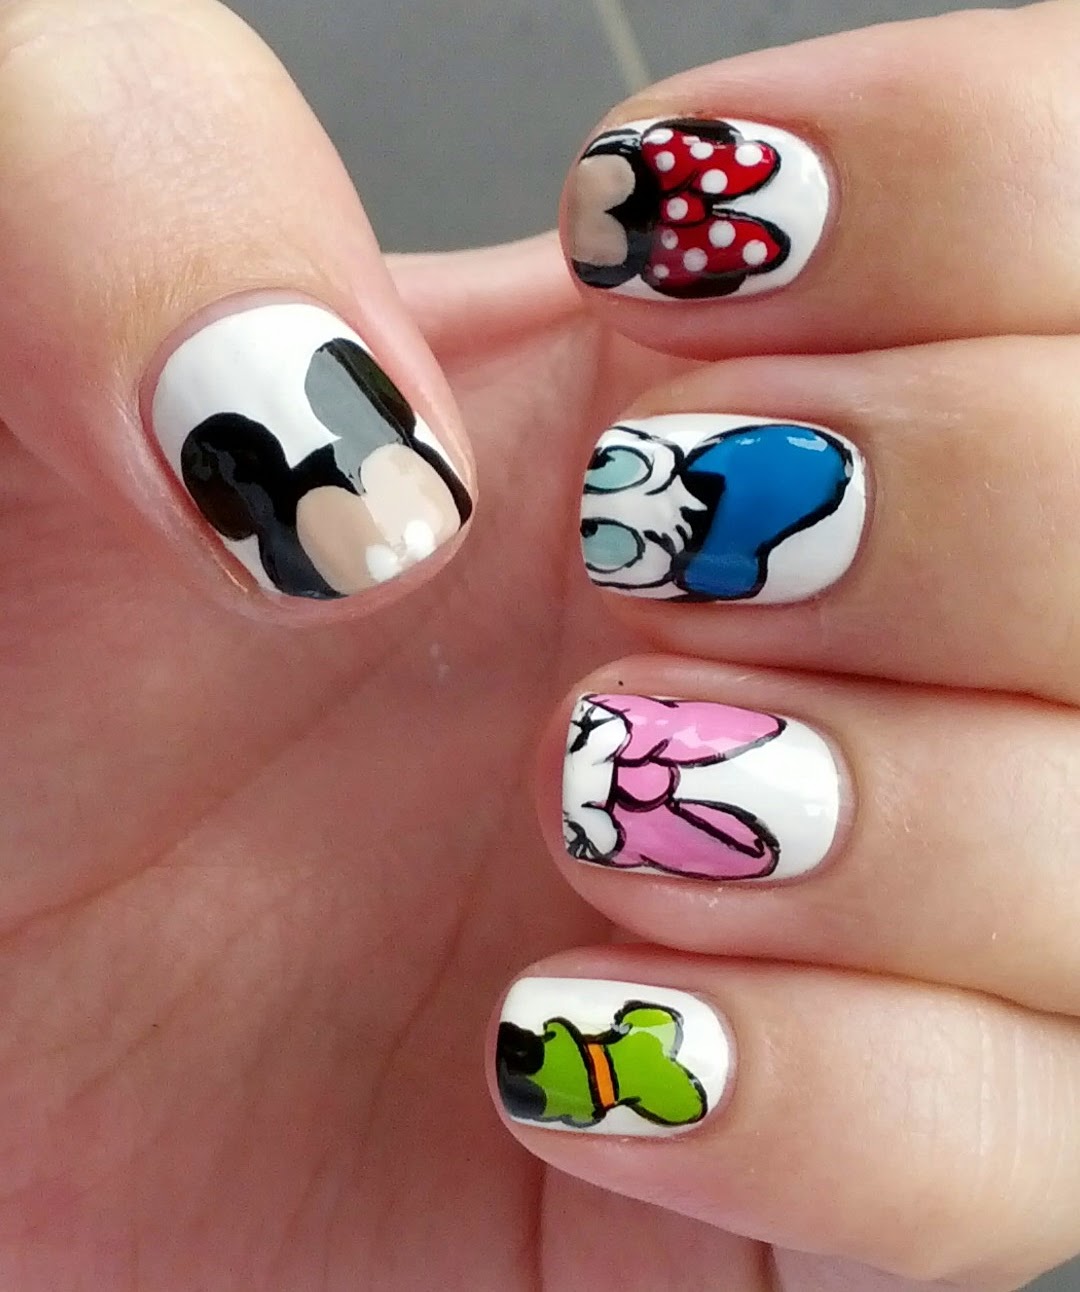 Disney nails designs for short nails